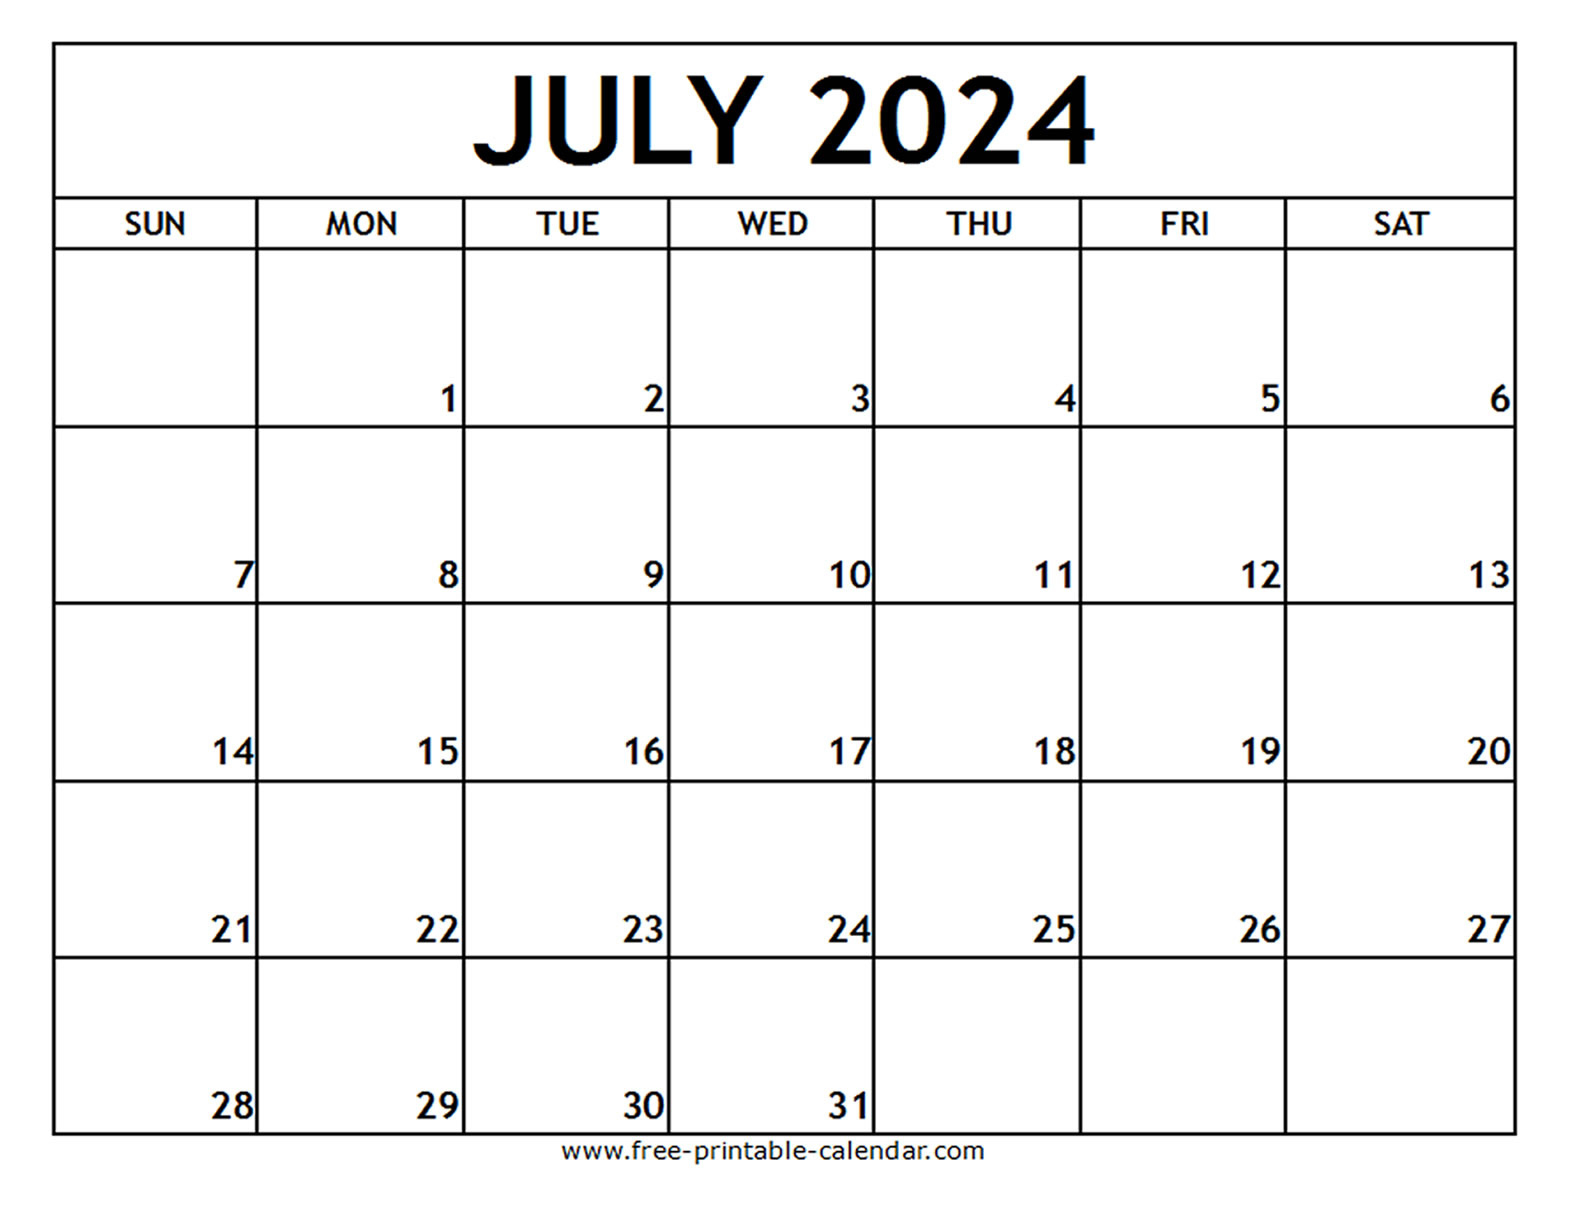 July 2024 Printable Calendar - Free-Printable-Calendar intended for July 2024 Free Calendar